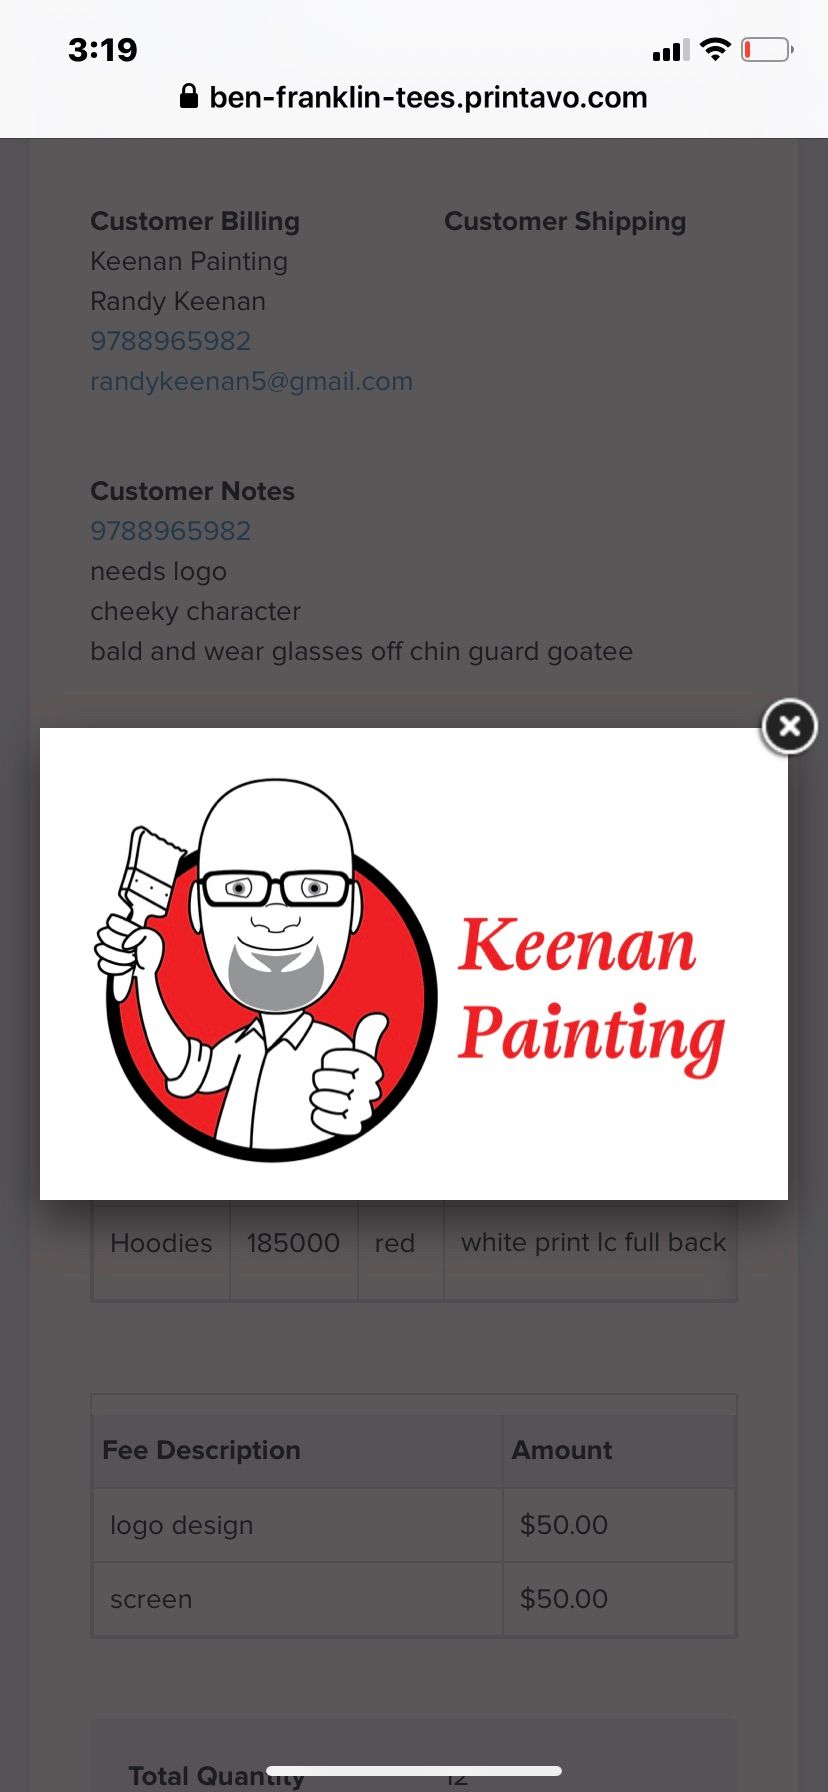 Keenan Painting and handyman services